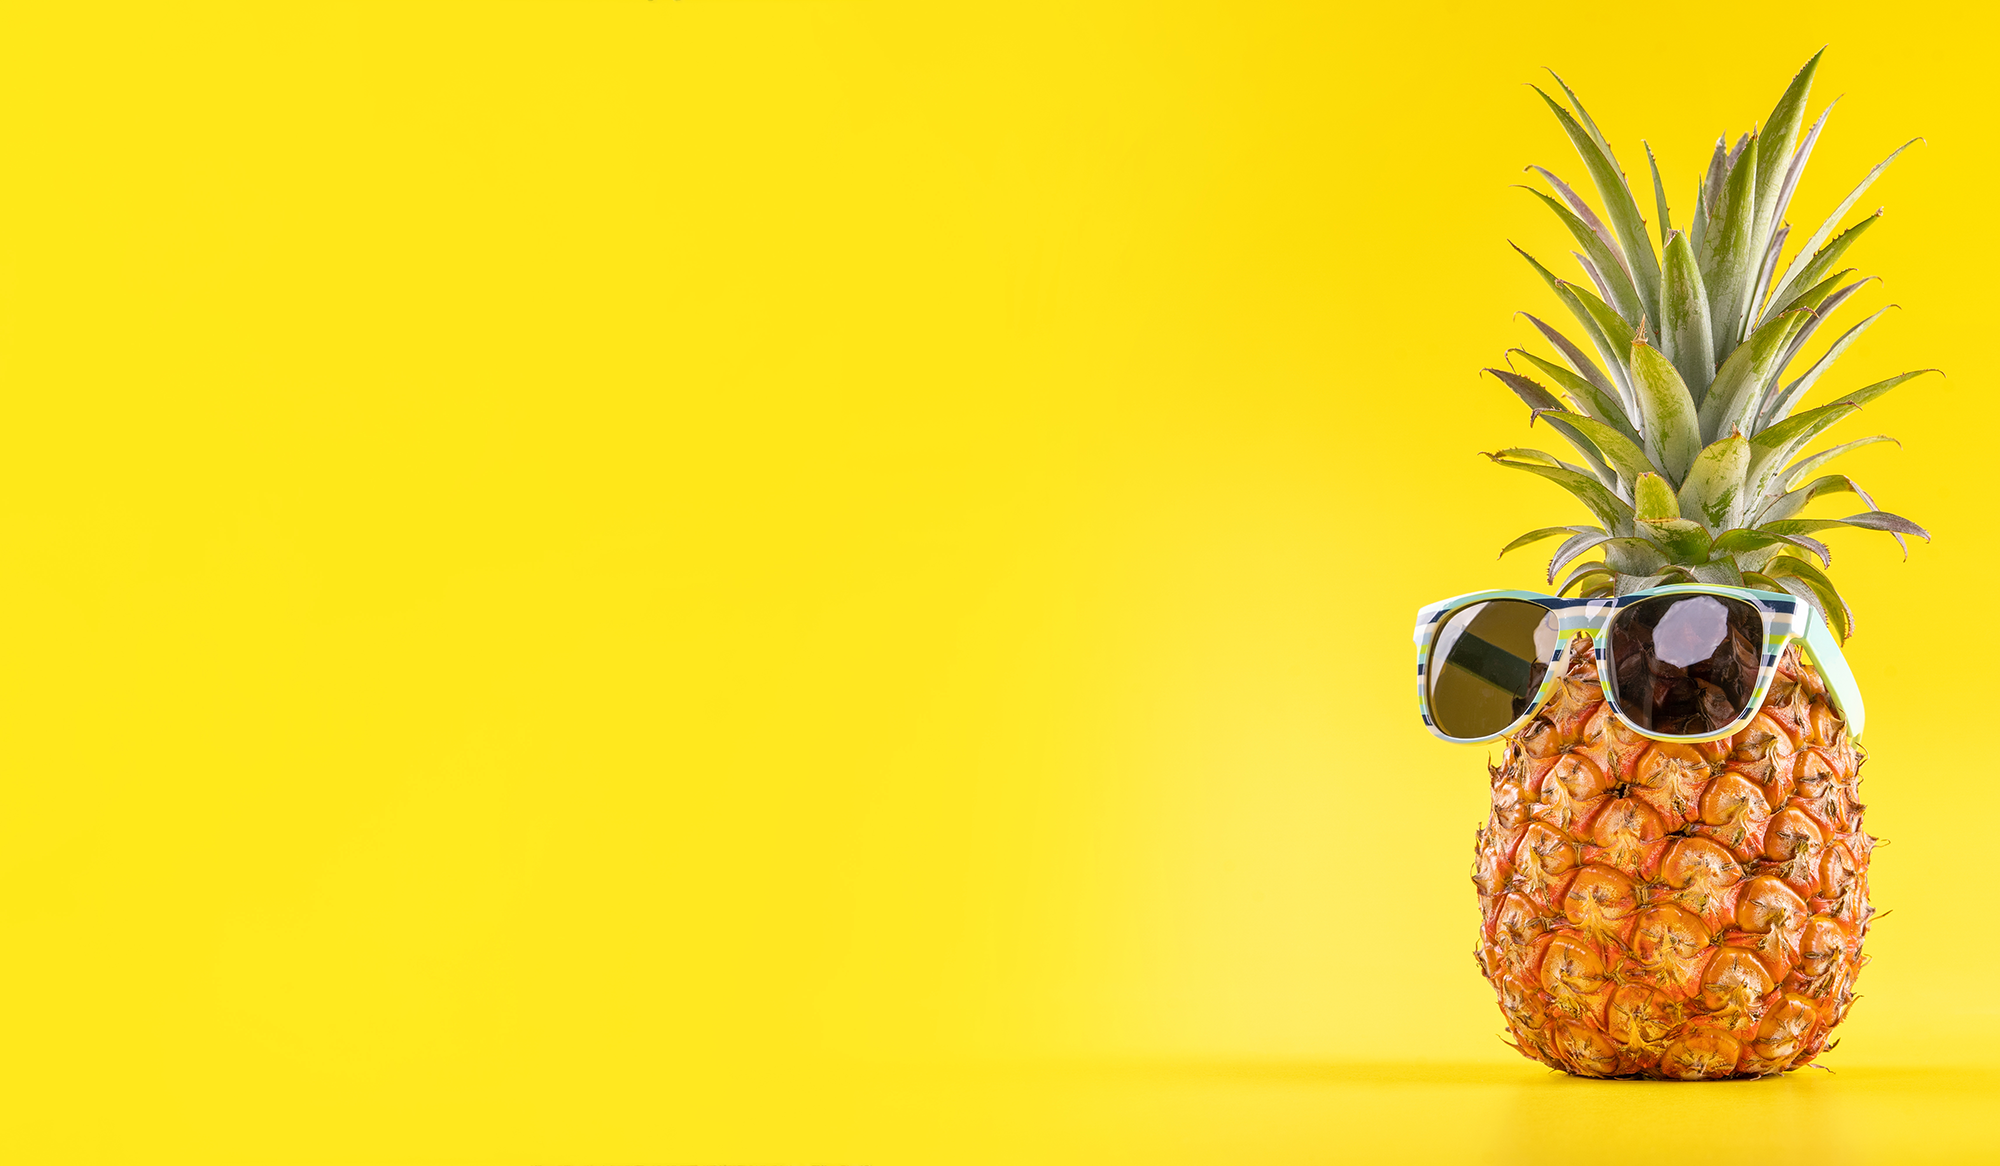 Sunglass Pineapple - RomixImage